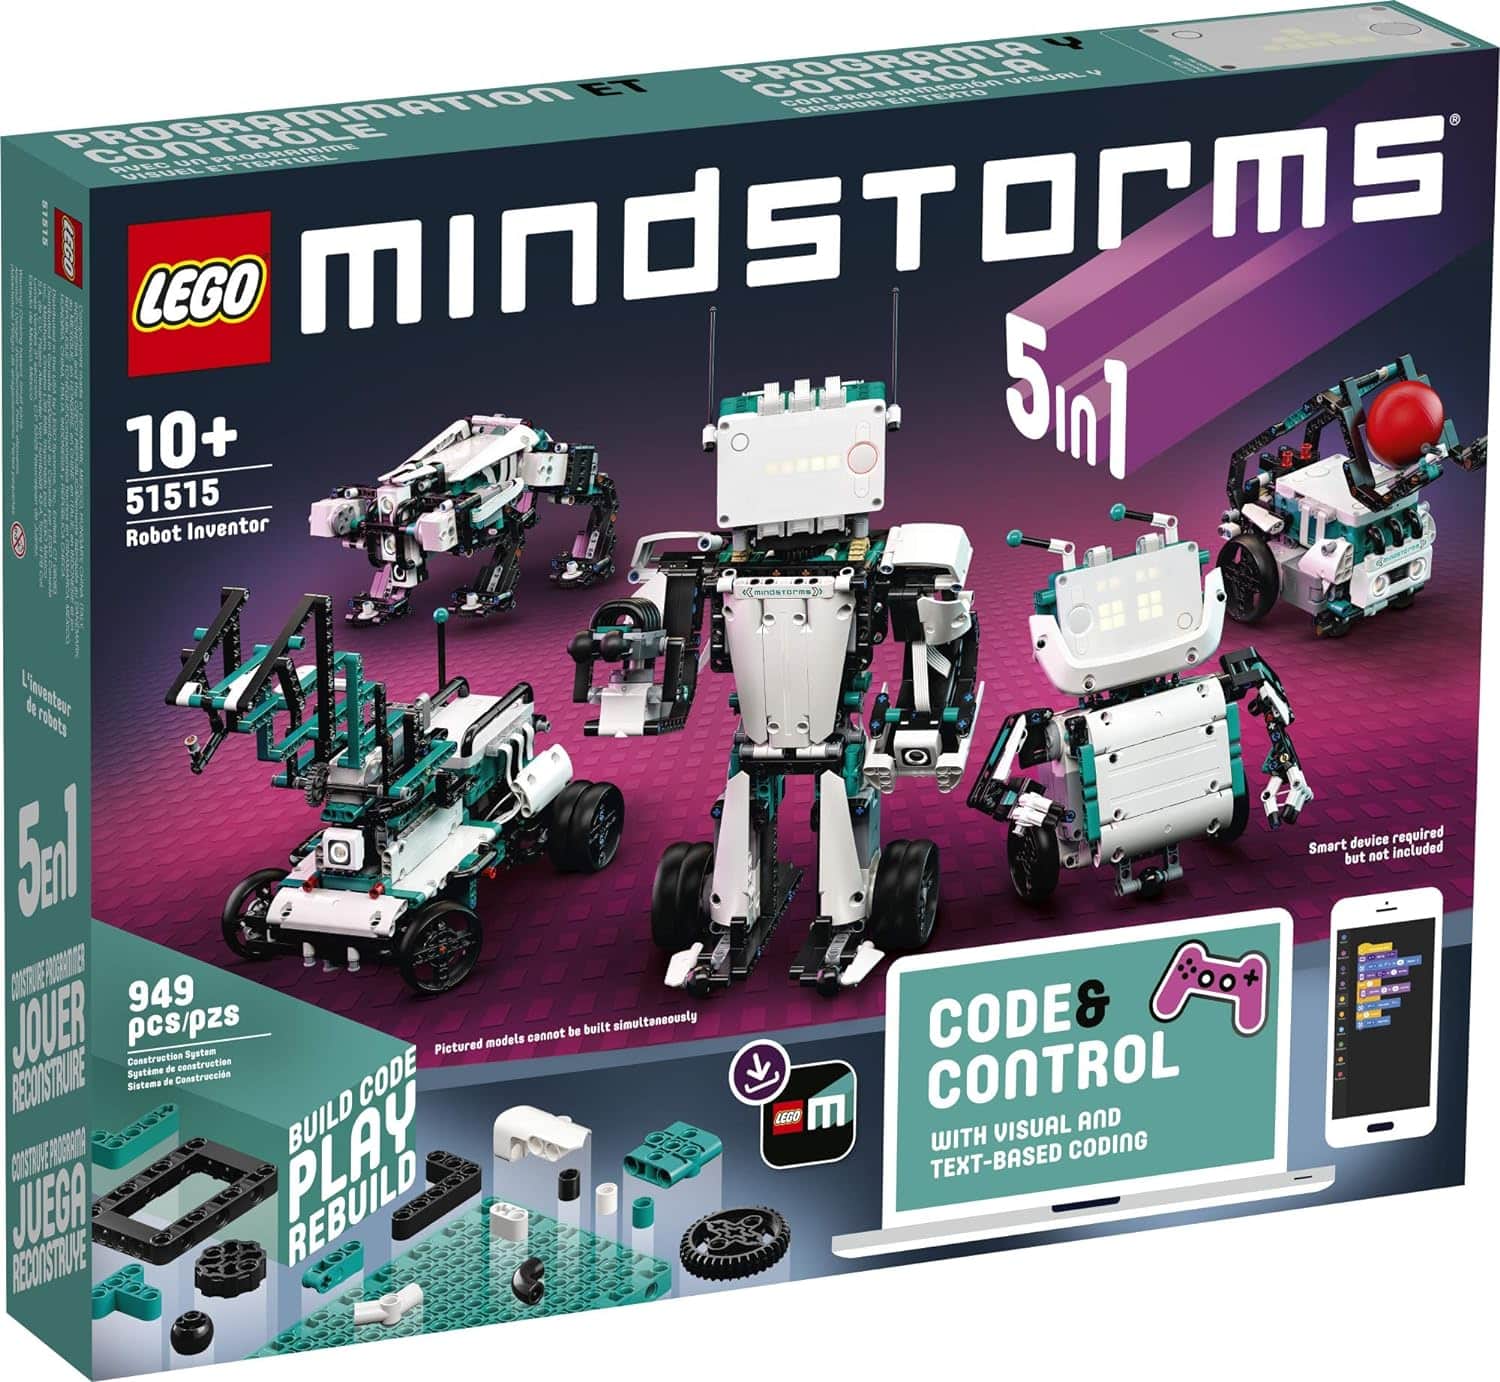 LEGO MINDSTORMS Robot Inventor Building Set: Unleash Your Child's Creativity and STEM Skills